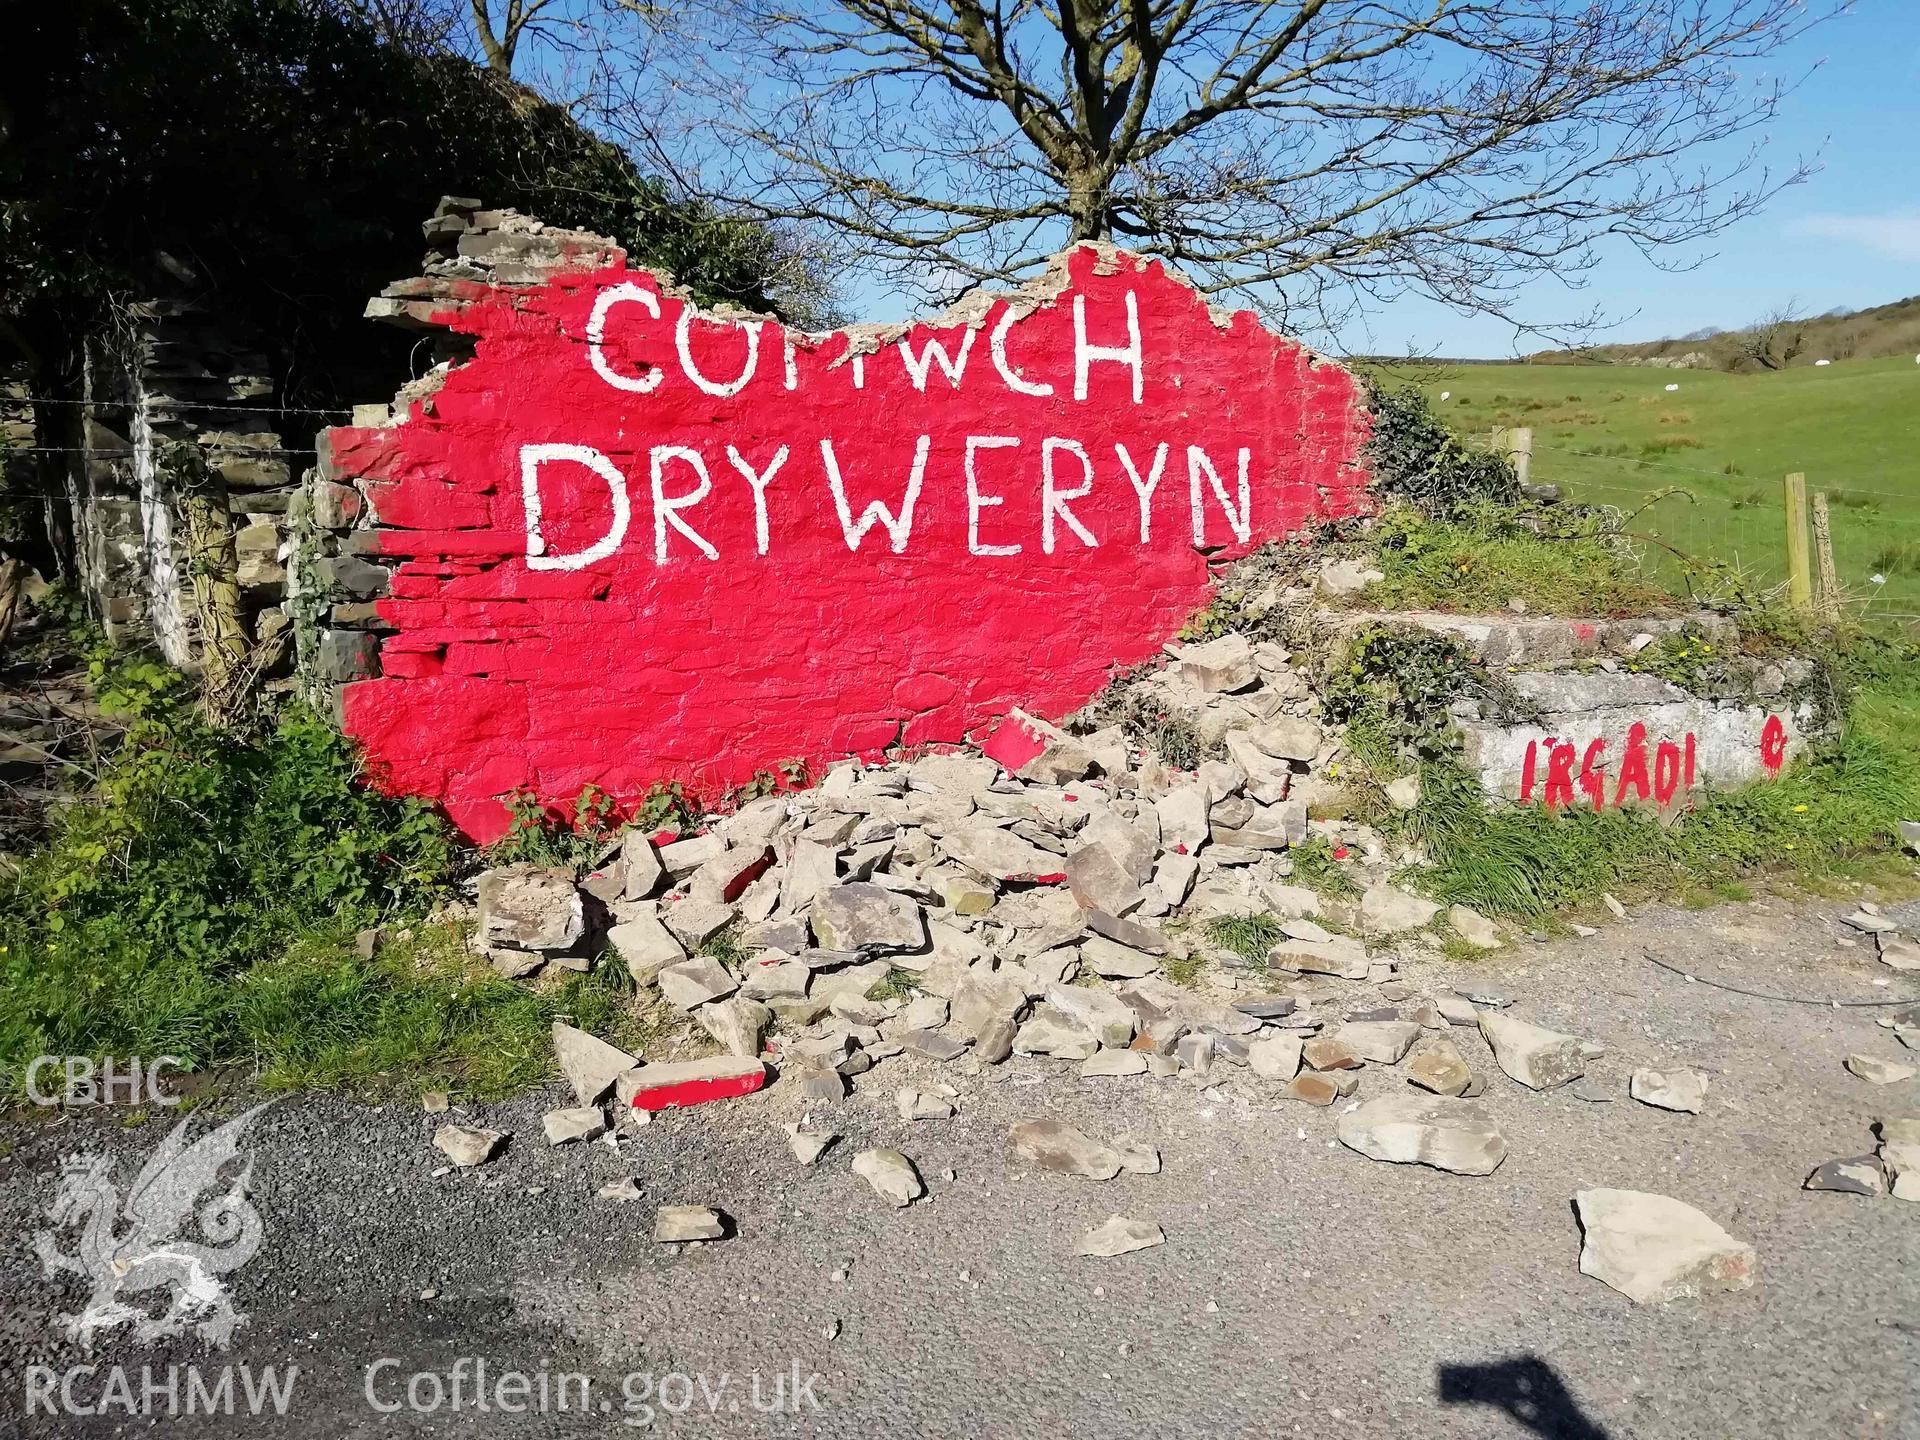 Digital colour photograph showing Cofiwch Dryweryn Wall, after vandalism. Taken 13 April 2019.